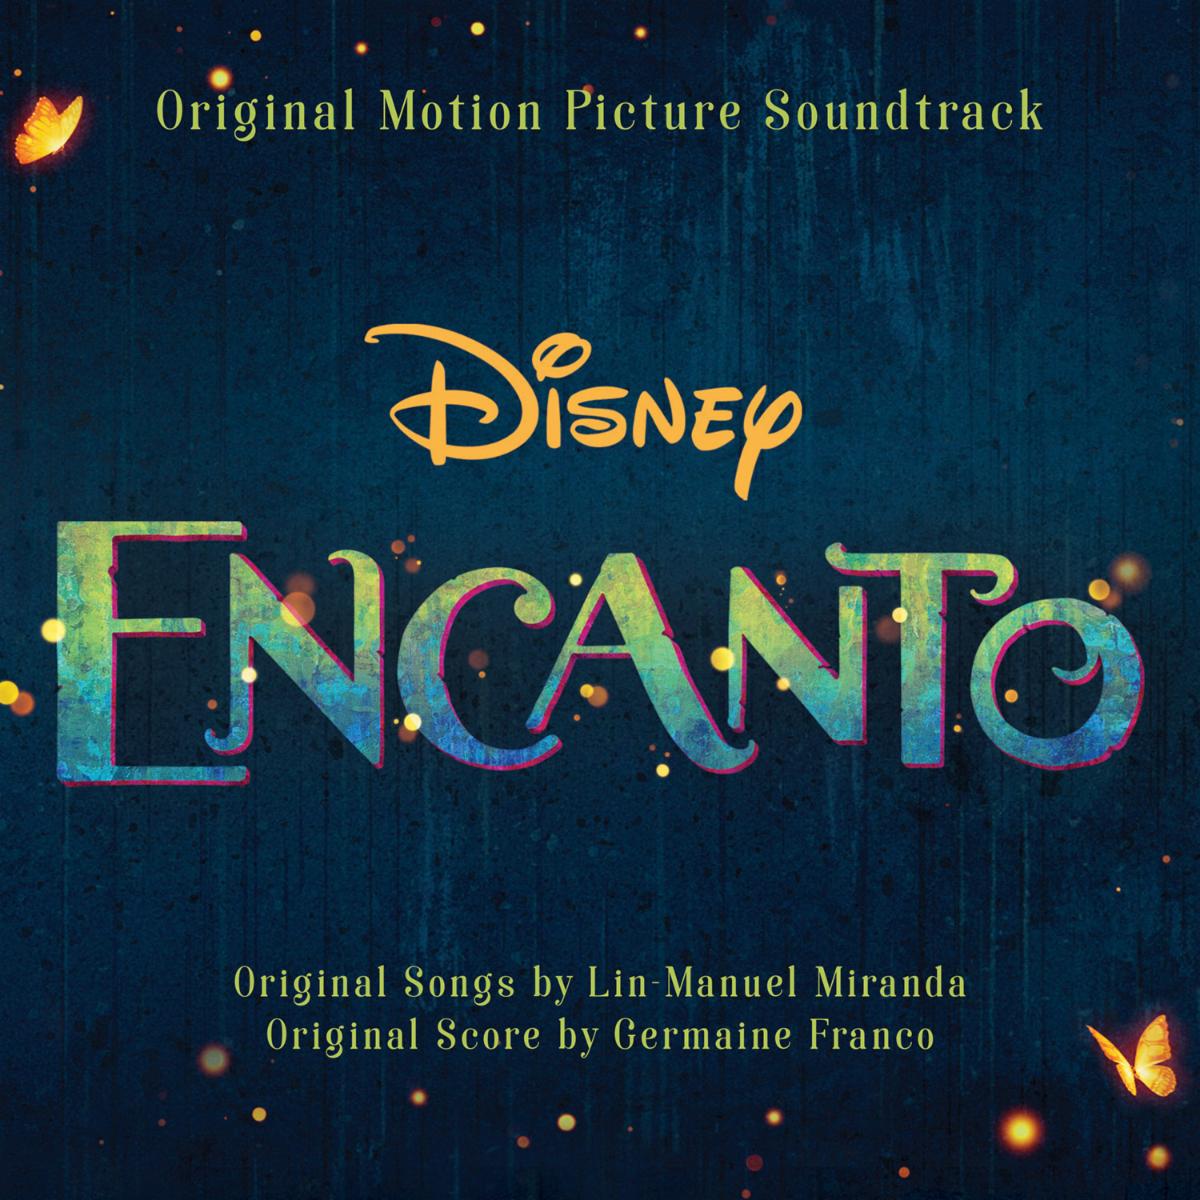 Encanto Poster via Disney for use by 360 Magazine